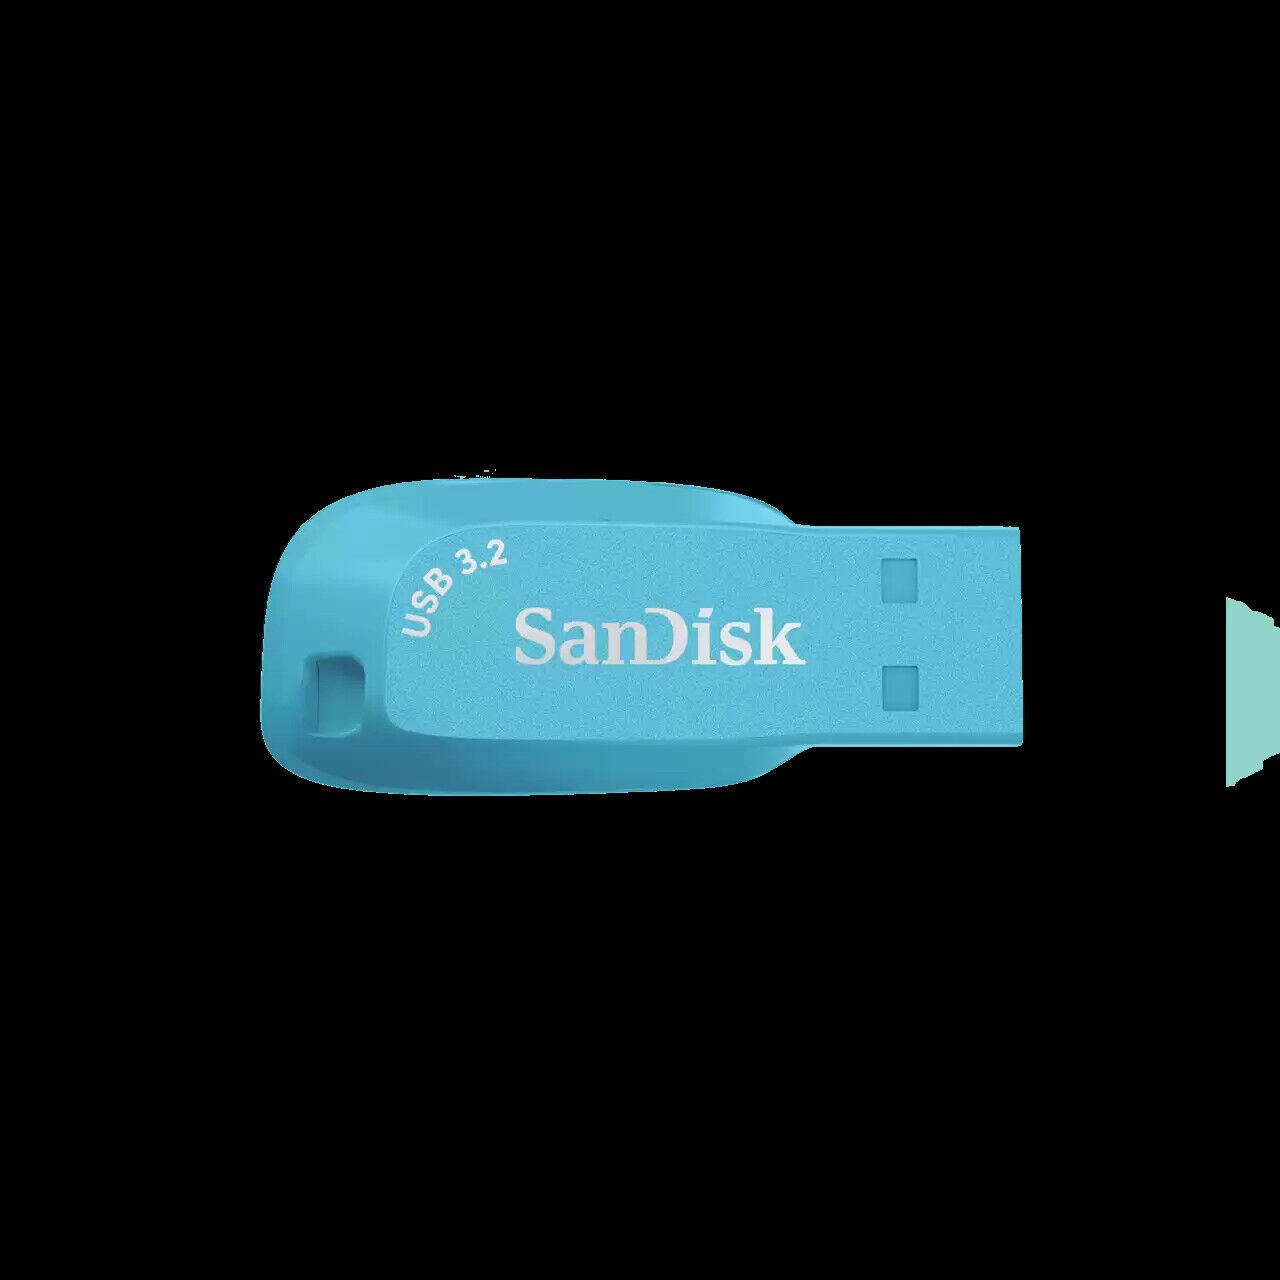 SanDisk 256GB Ultra Shift USB 3.2 Gen 1 Flash Drive, Blue - SDCZ410-256G-G46BB